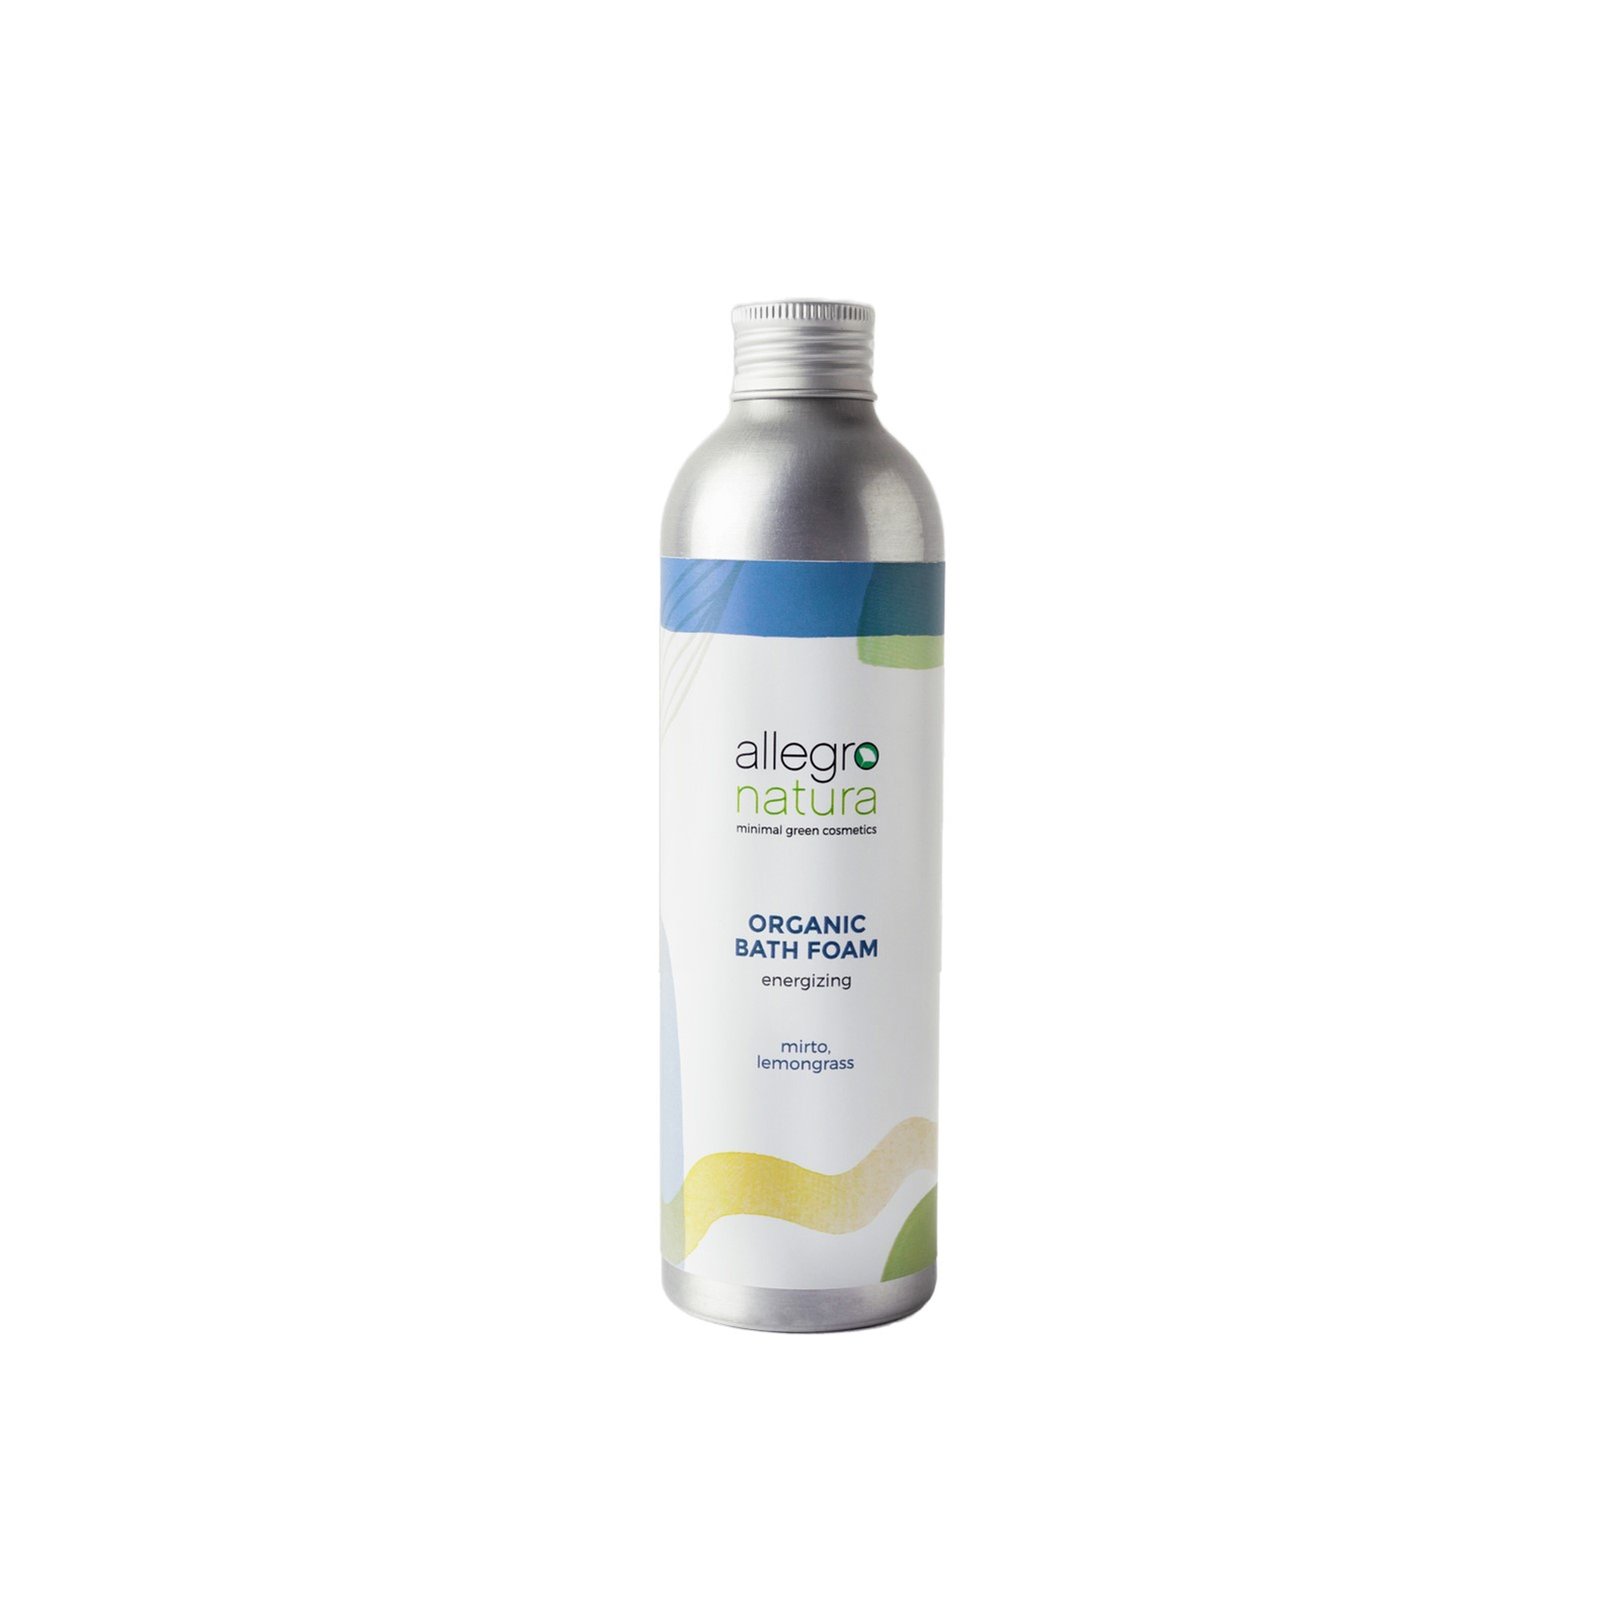 Allegro Natura Energizing Organic Bath Foam 250ml (8.45 fl oz)